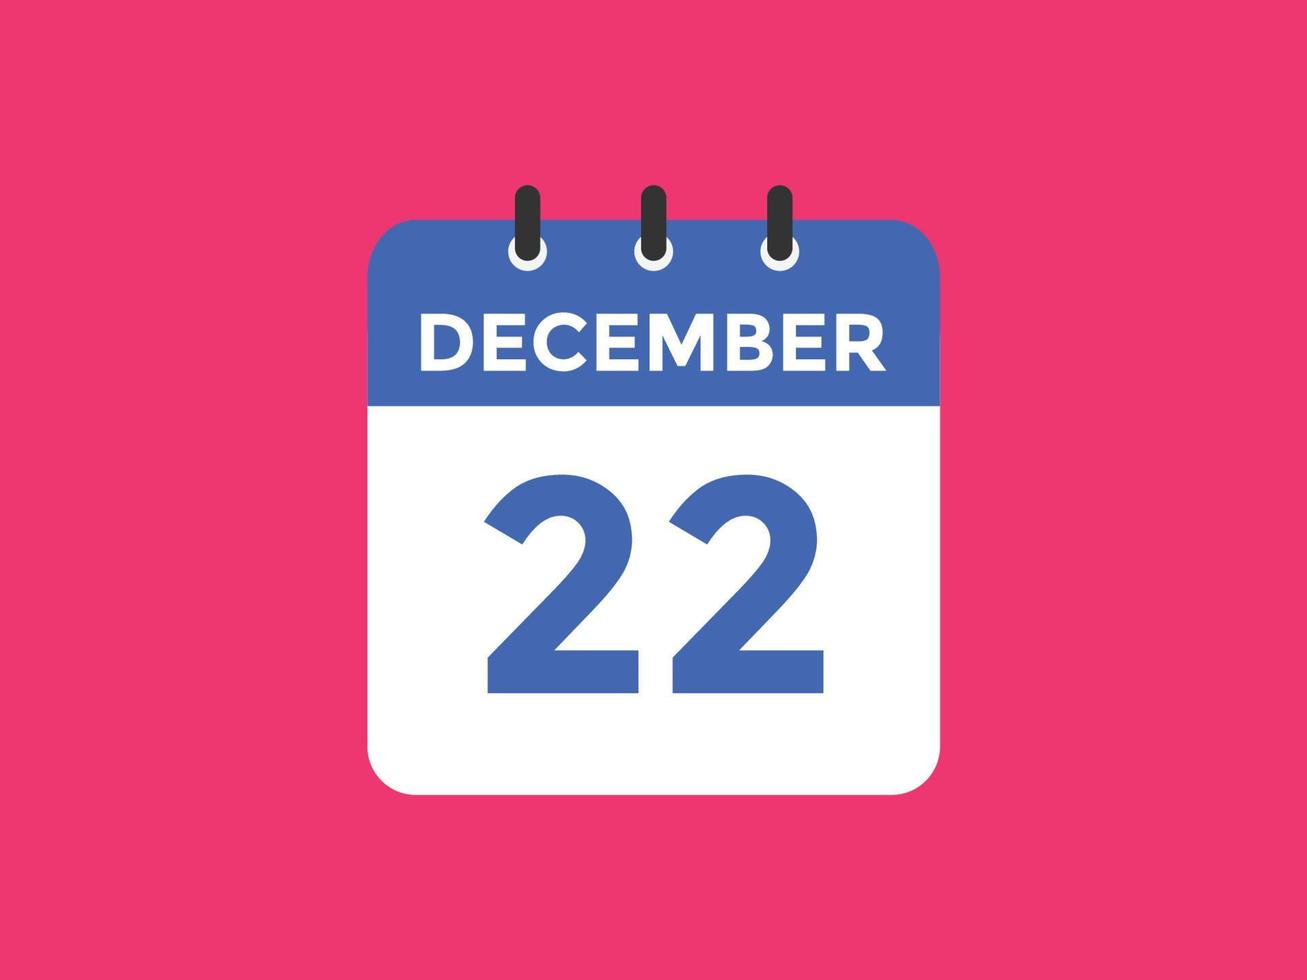 december 22 calendar reminder. 22th december daily calendar icon template. Calendar 22th december icon Design template. Vector illustration